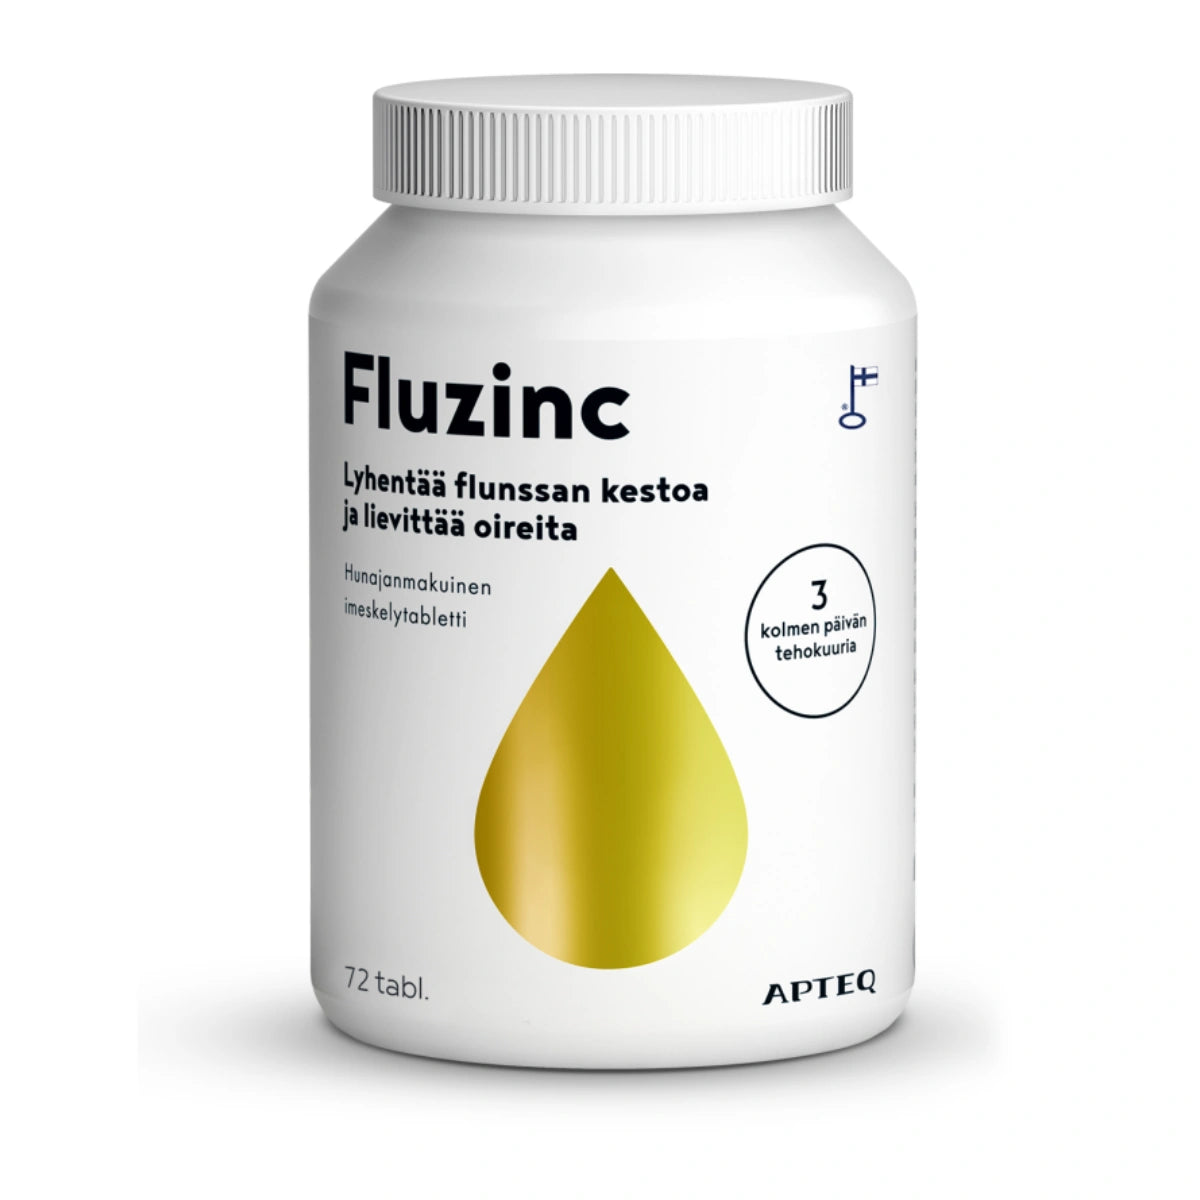 APTEQ Fluzinc hunaja imeskelytabletti 72 kpl sinkkiasetaattivalmiste